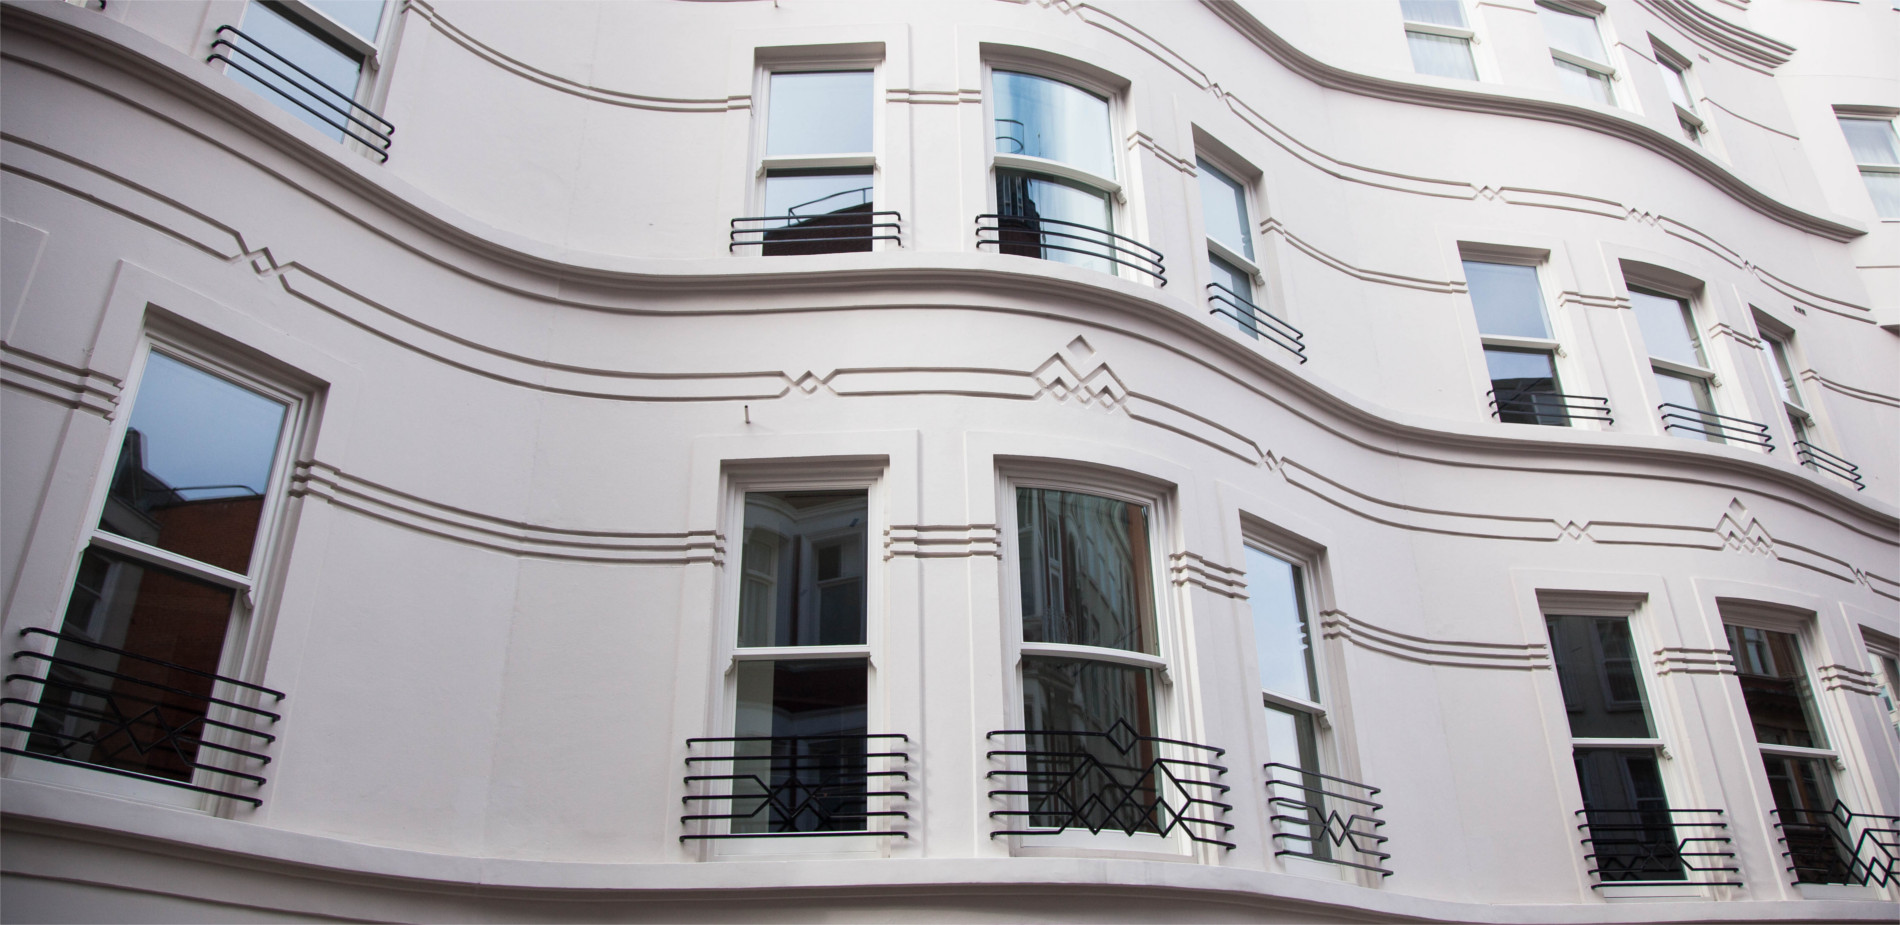 Accoya sash windows - K&D Joinery London